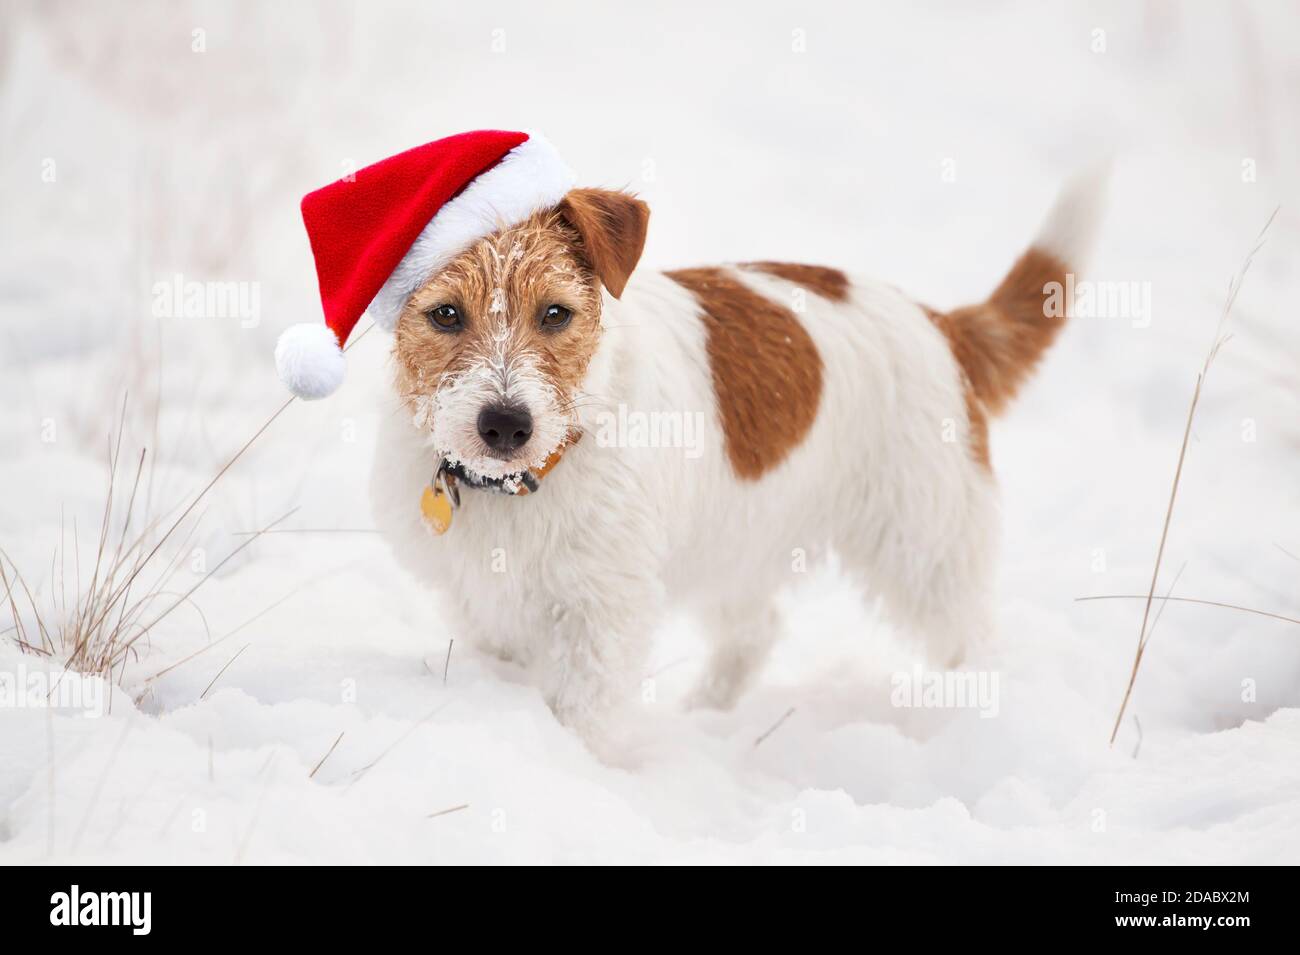 Happy cute snowy christmas holiday santa pet dog puppy looking in ...